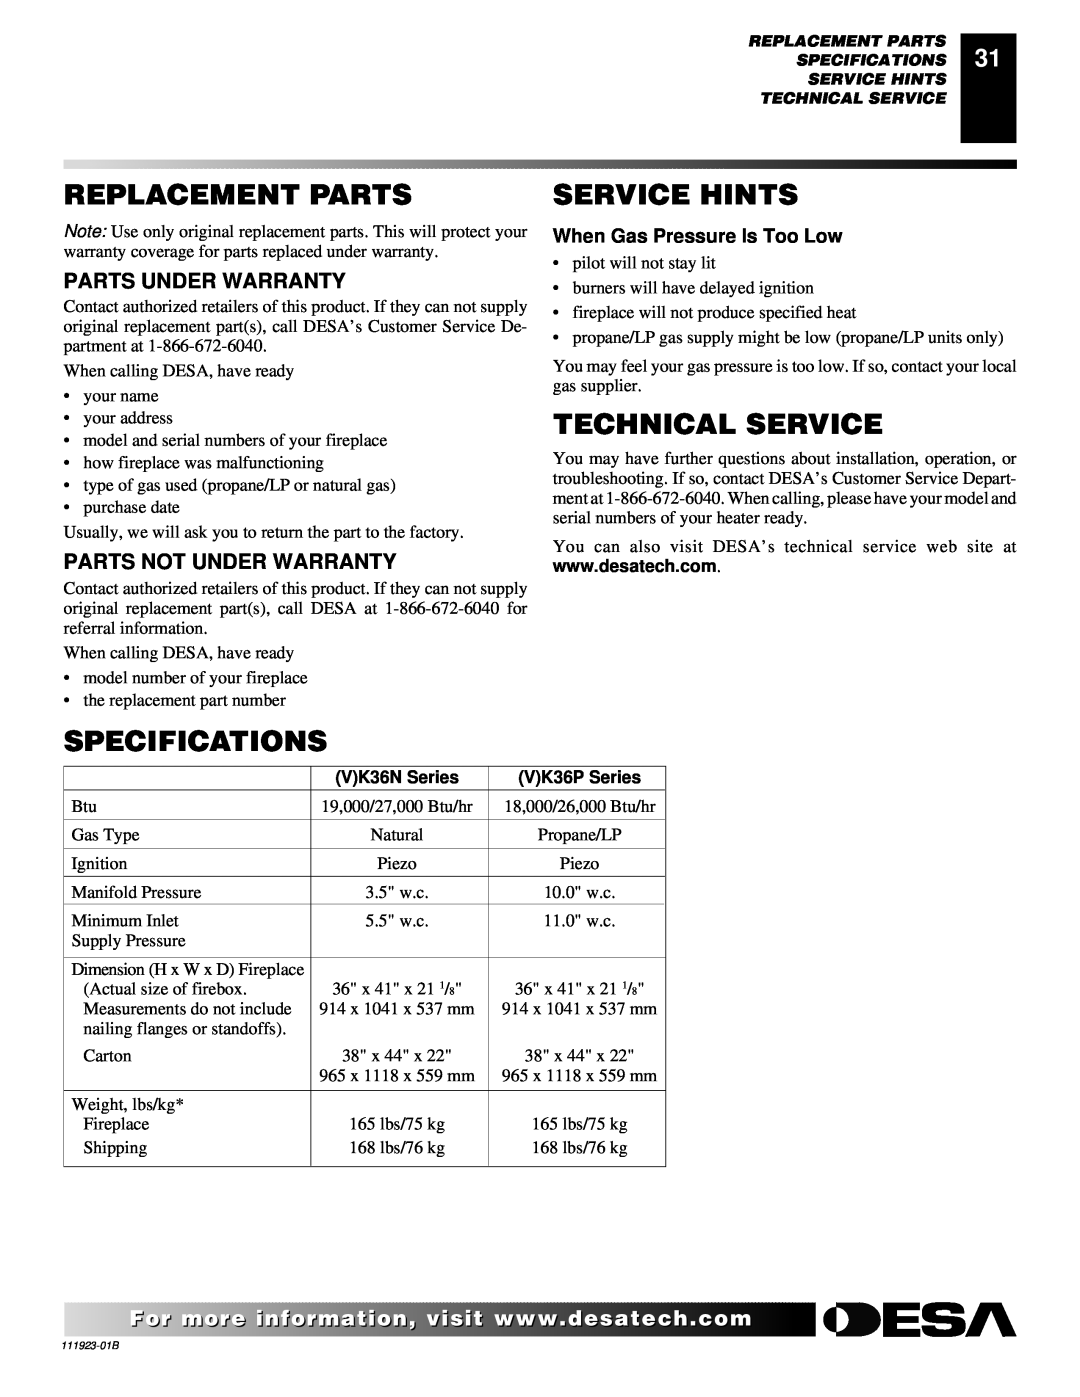 Desa (V)K36P SERIES Replacement Parts, Service Hints, Technical Service, Specifications, Parts Under Warranty 